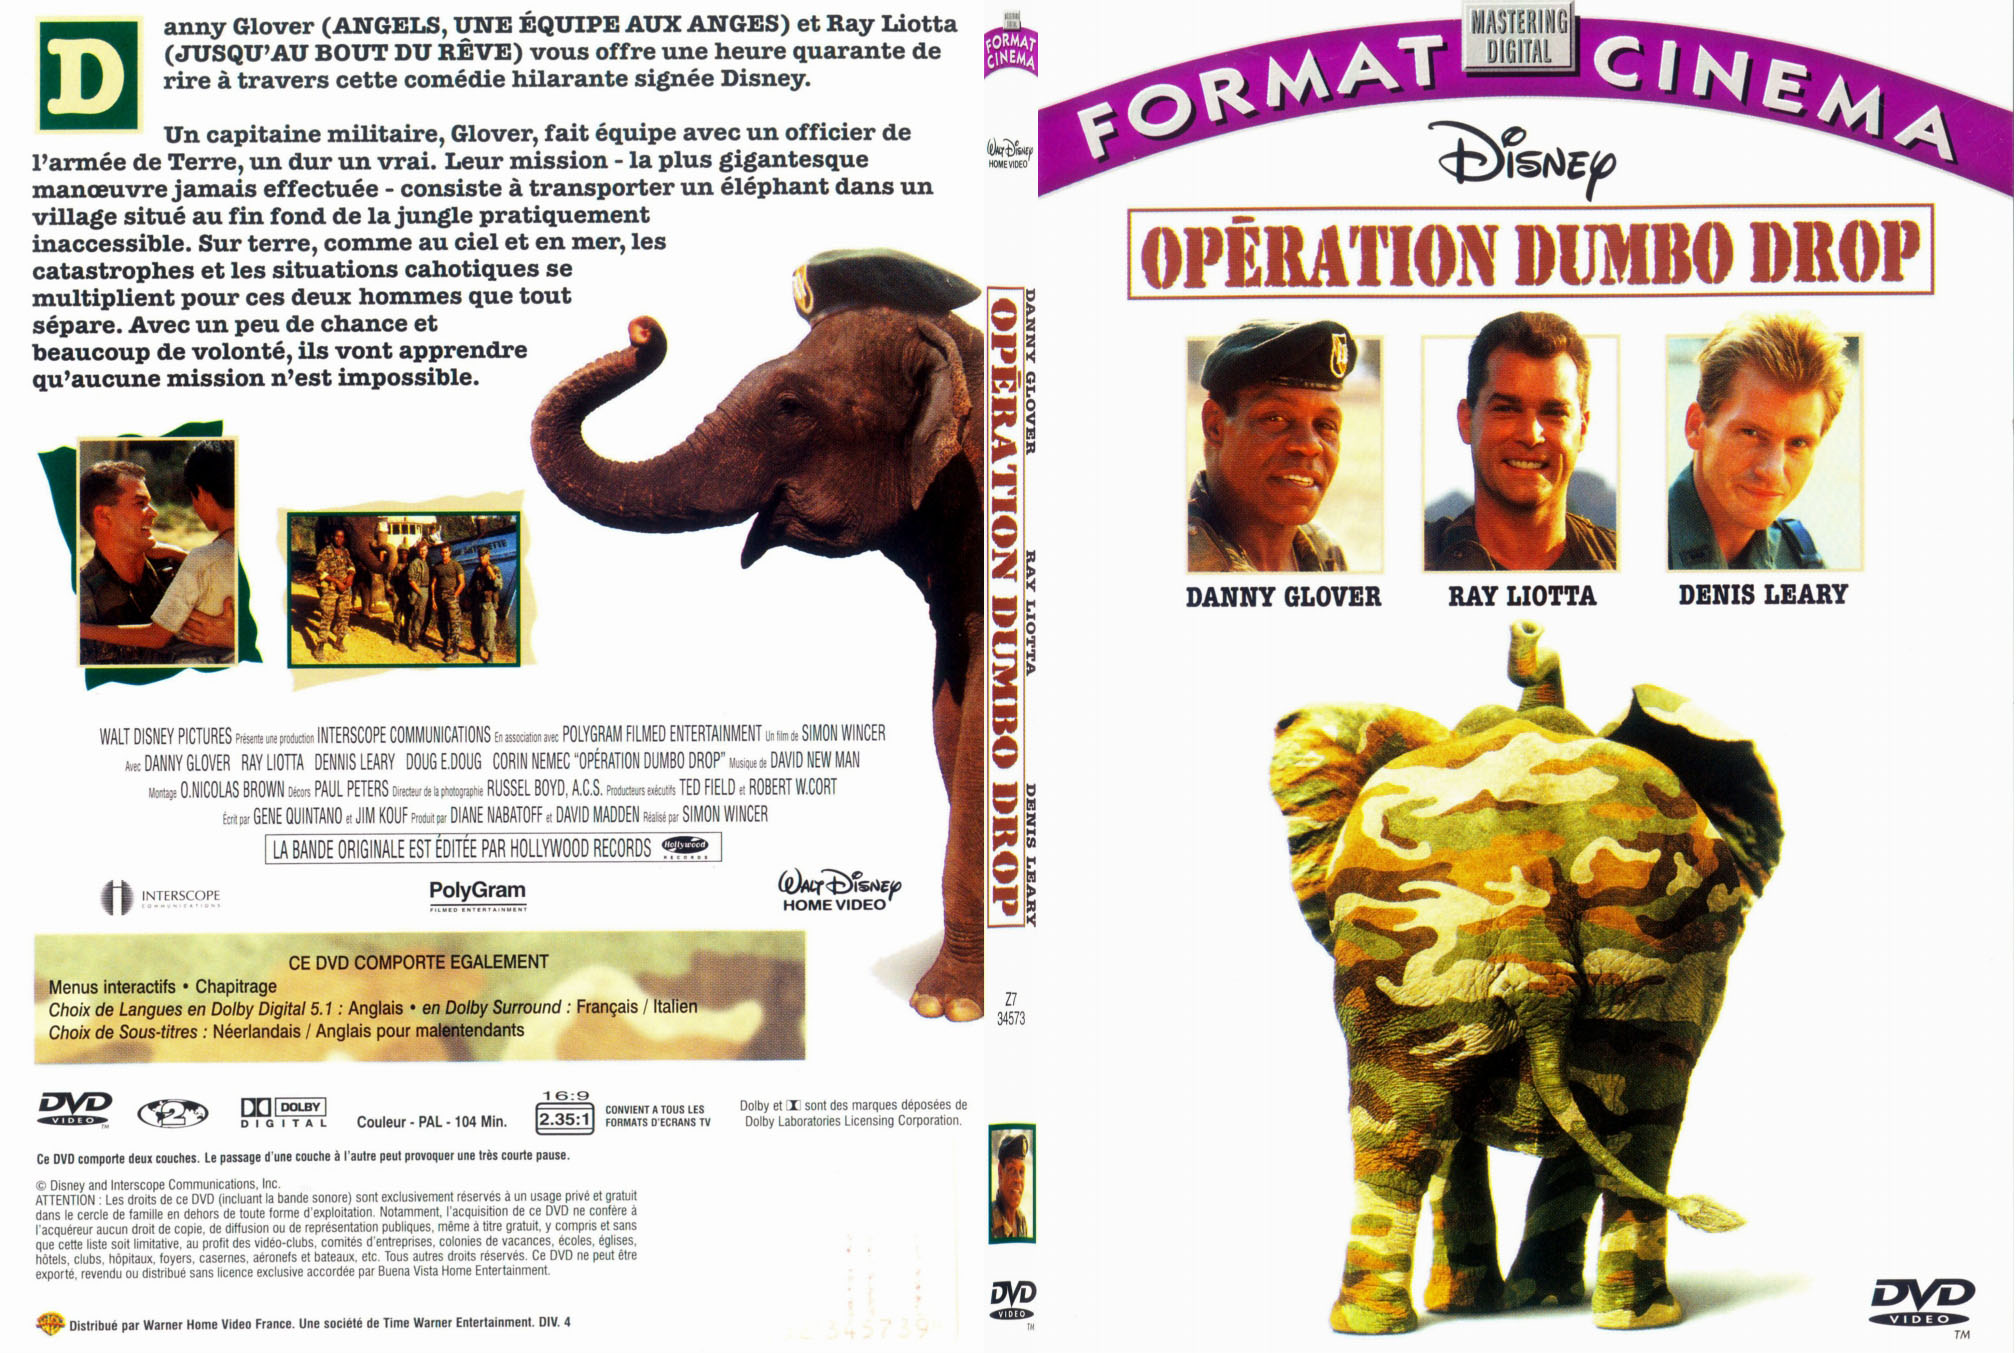 Jaquette DVD Operation dumbo drop - SLIM